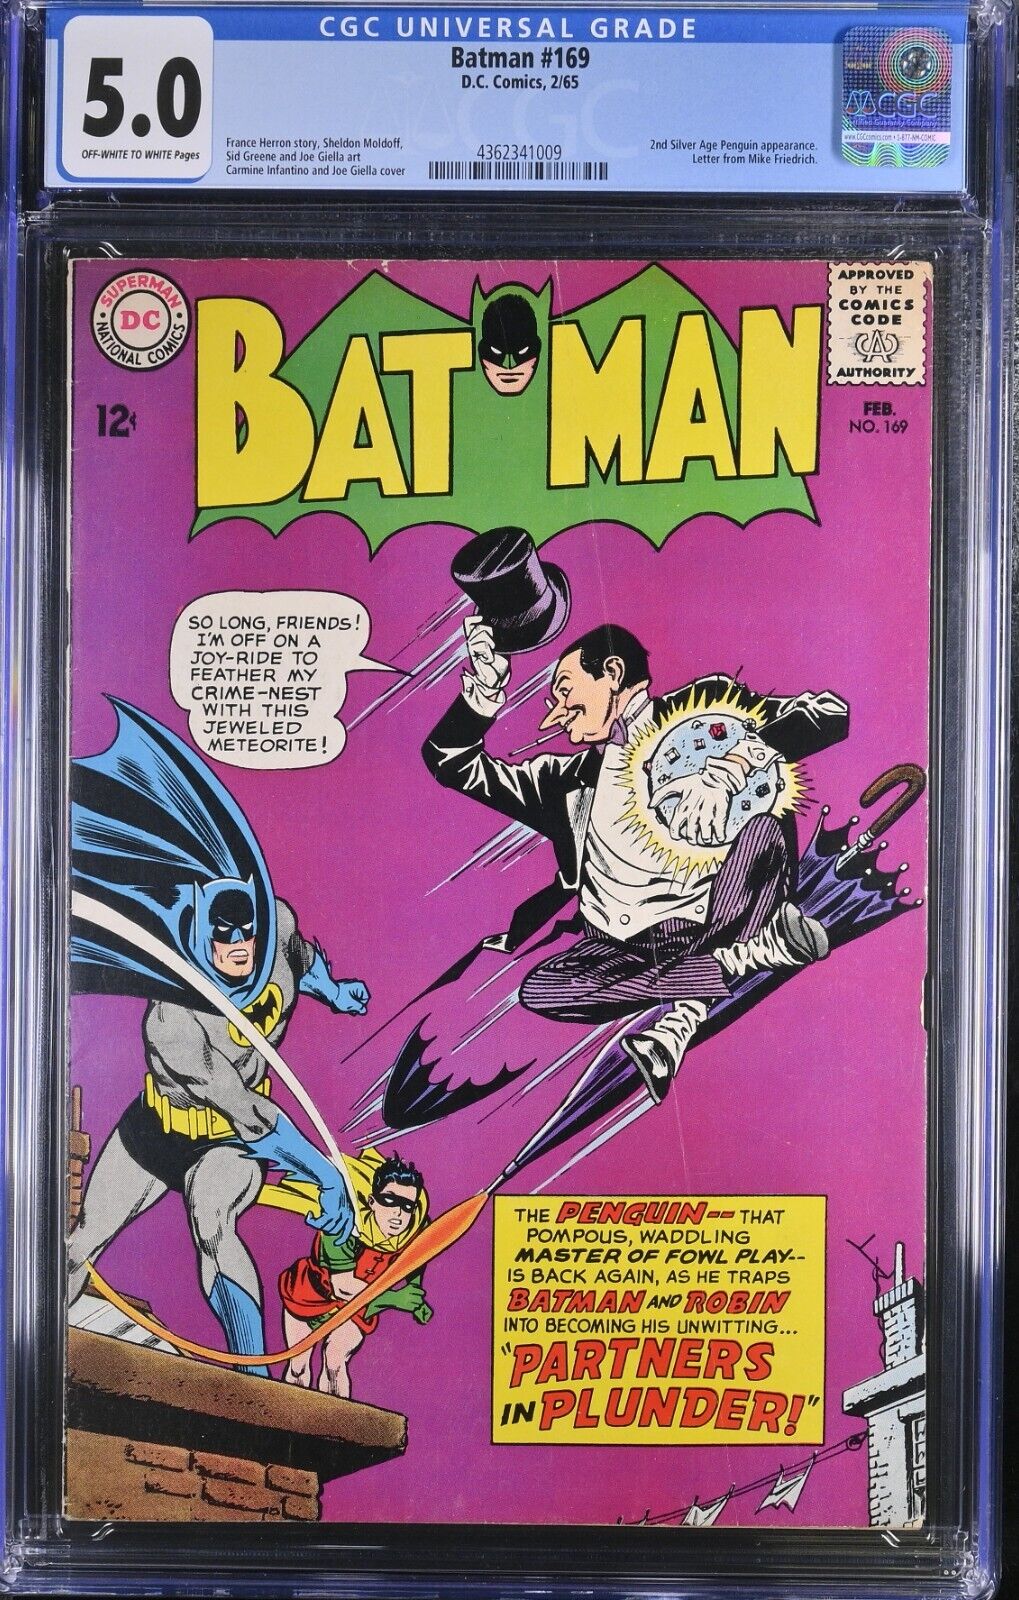 Batman #169 CGC 5.0 2nd Silver Age Penguin appearance (1965)